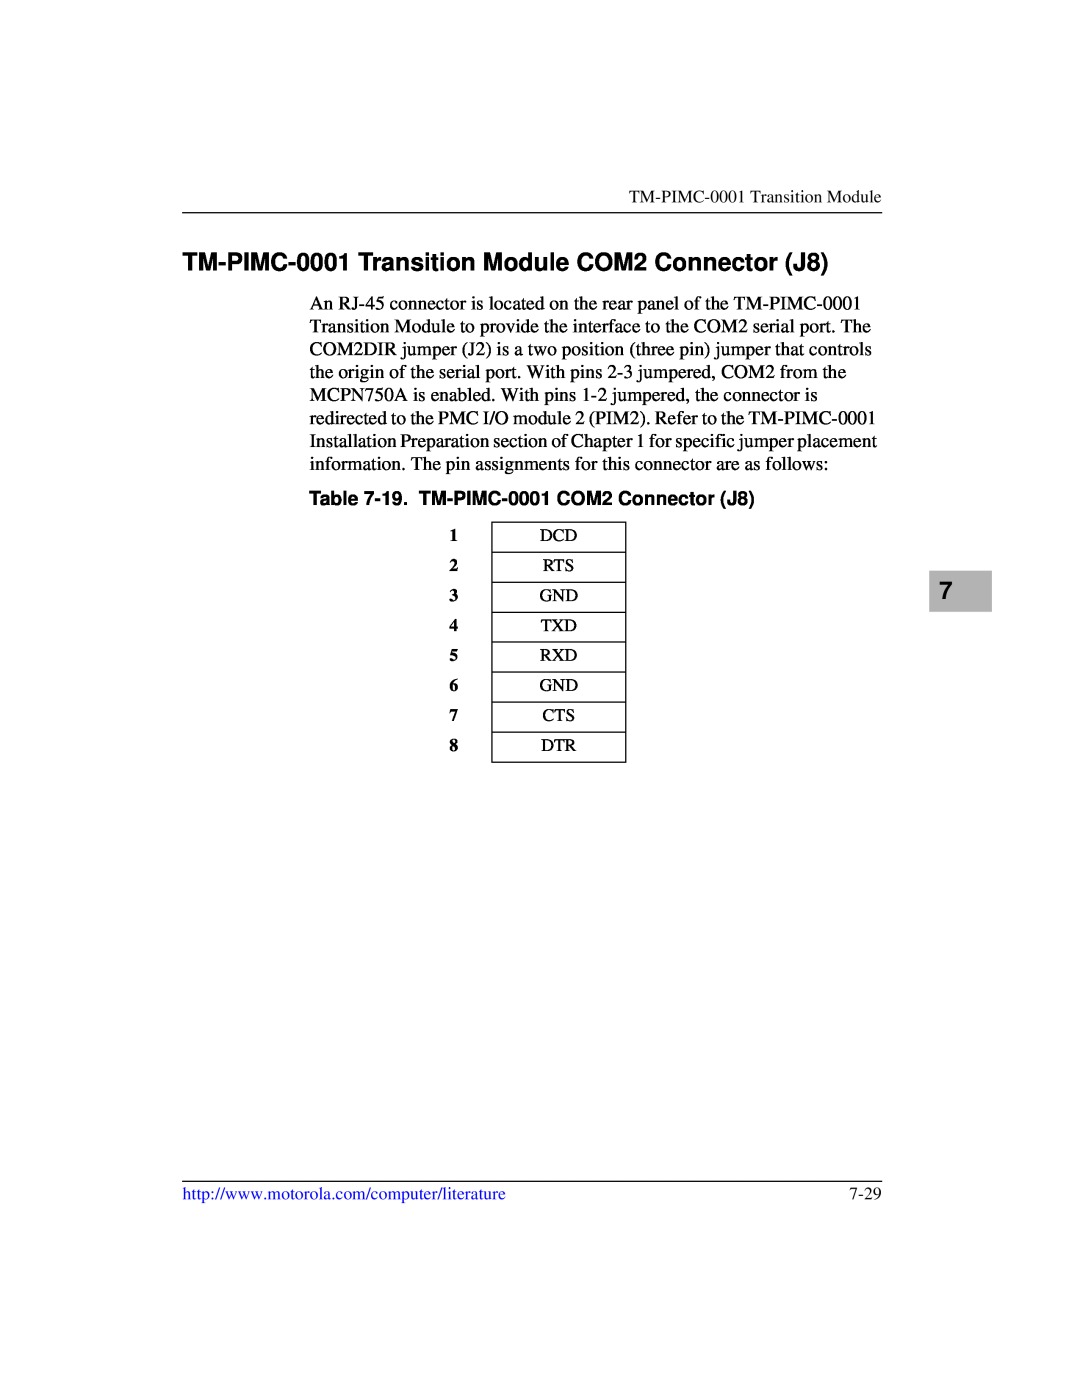 Motorola IH5, MCPN750A manual TM-PIMC-0001 Transition Module COM2 Connector J8, 19. TM-PIMC-0001 COM2 Connector J8 